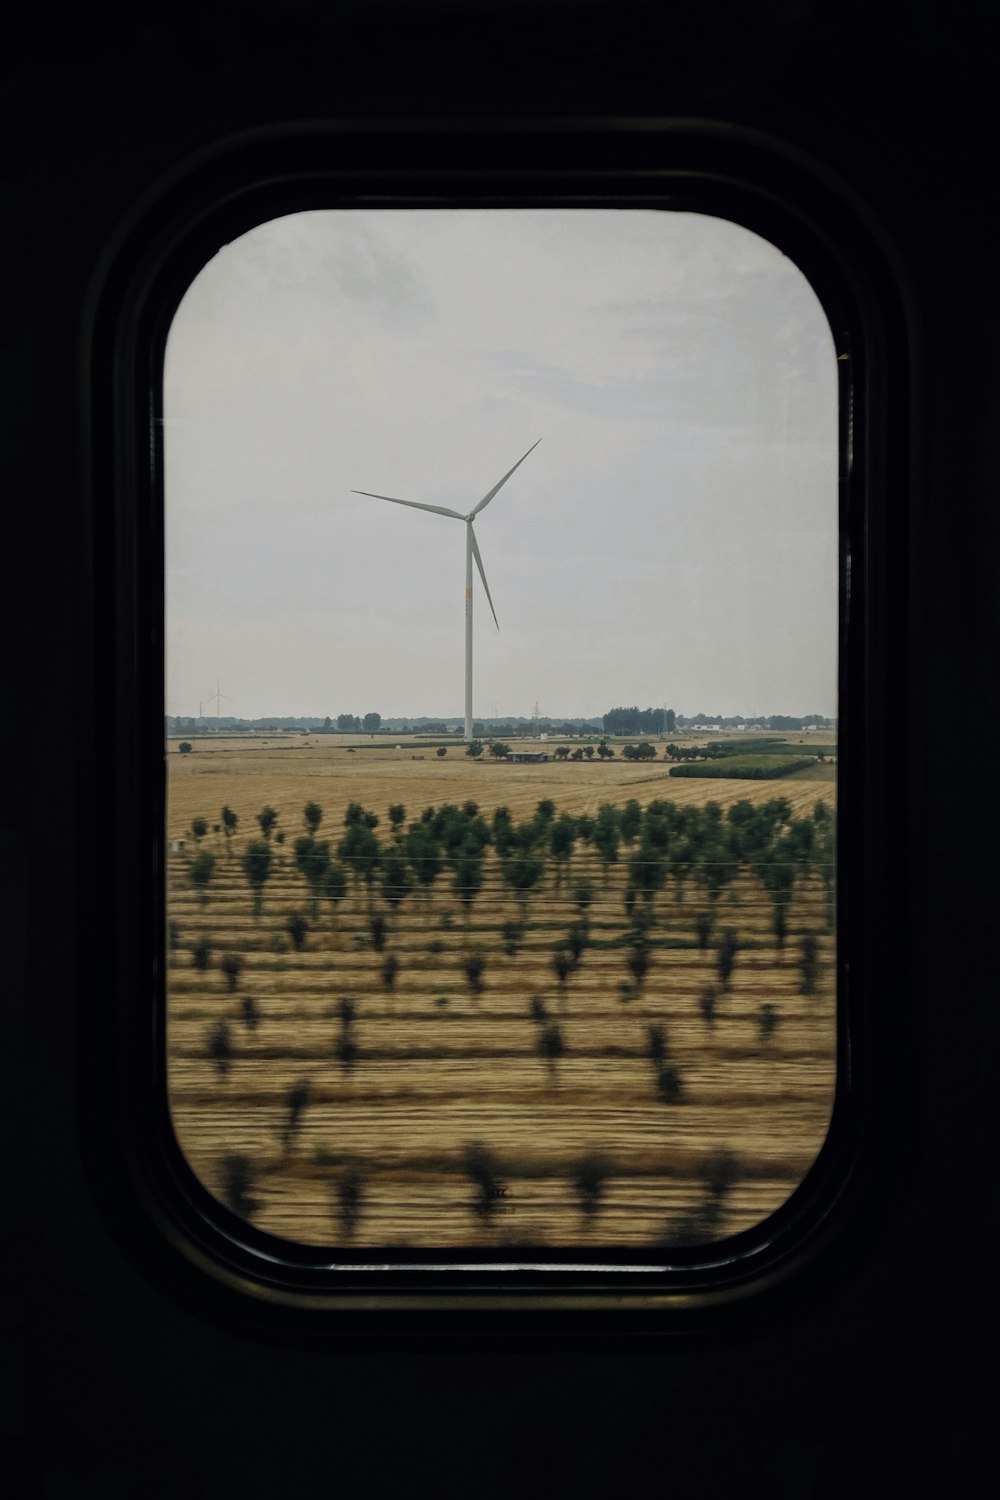 a view of a wind turbine through a window